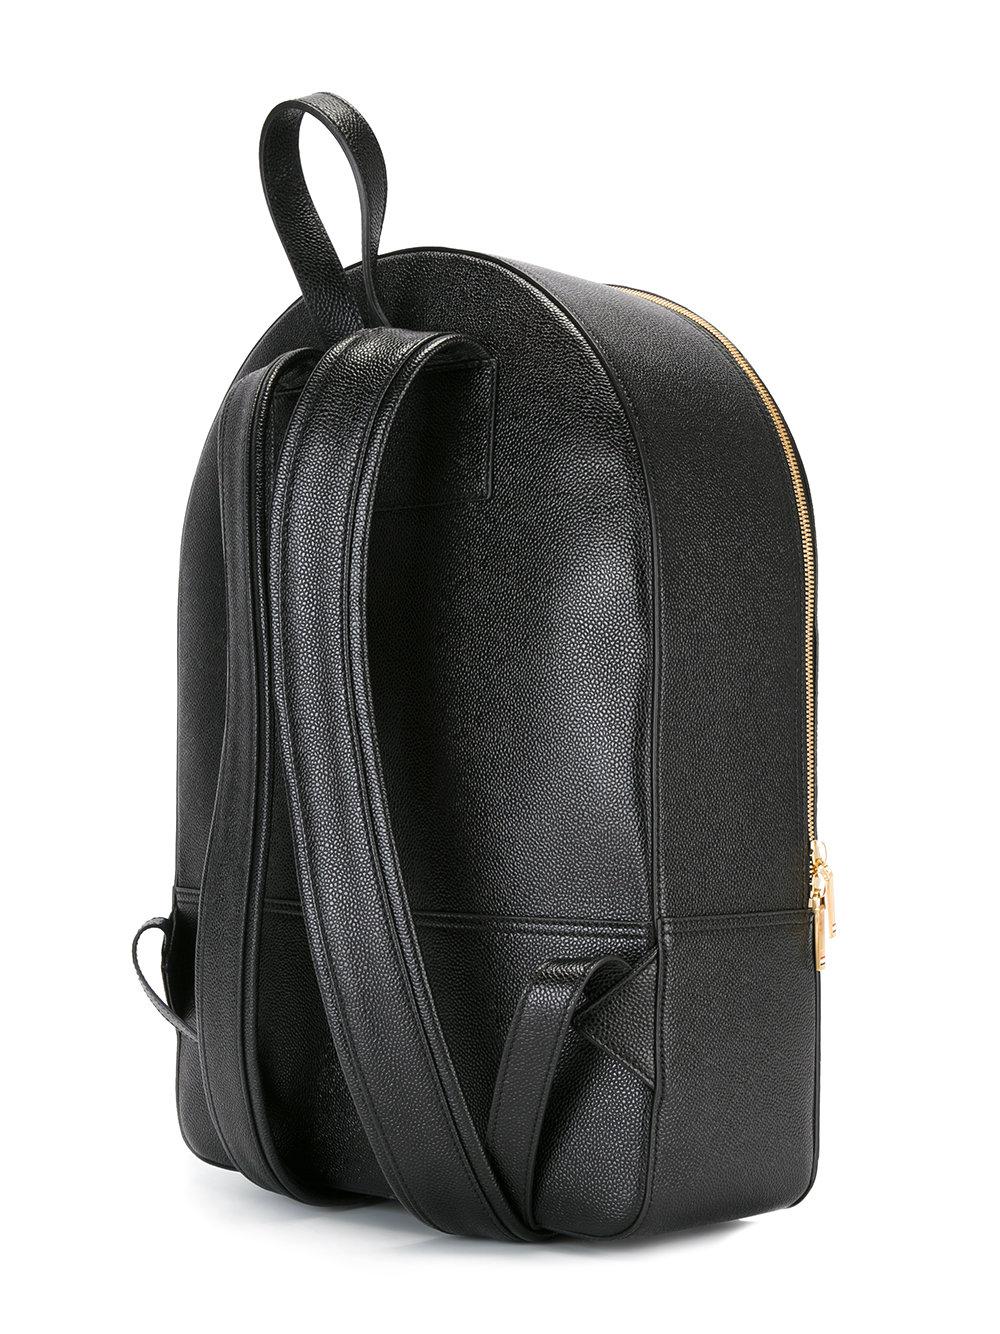 Thom Browne Leather Diagonal Stripe Backpack in Black for Men - Lyst